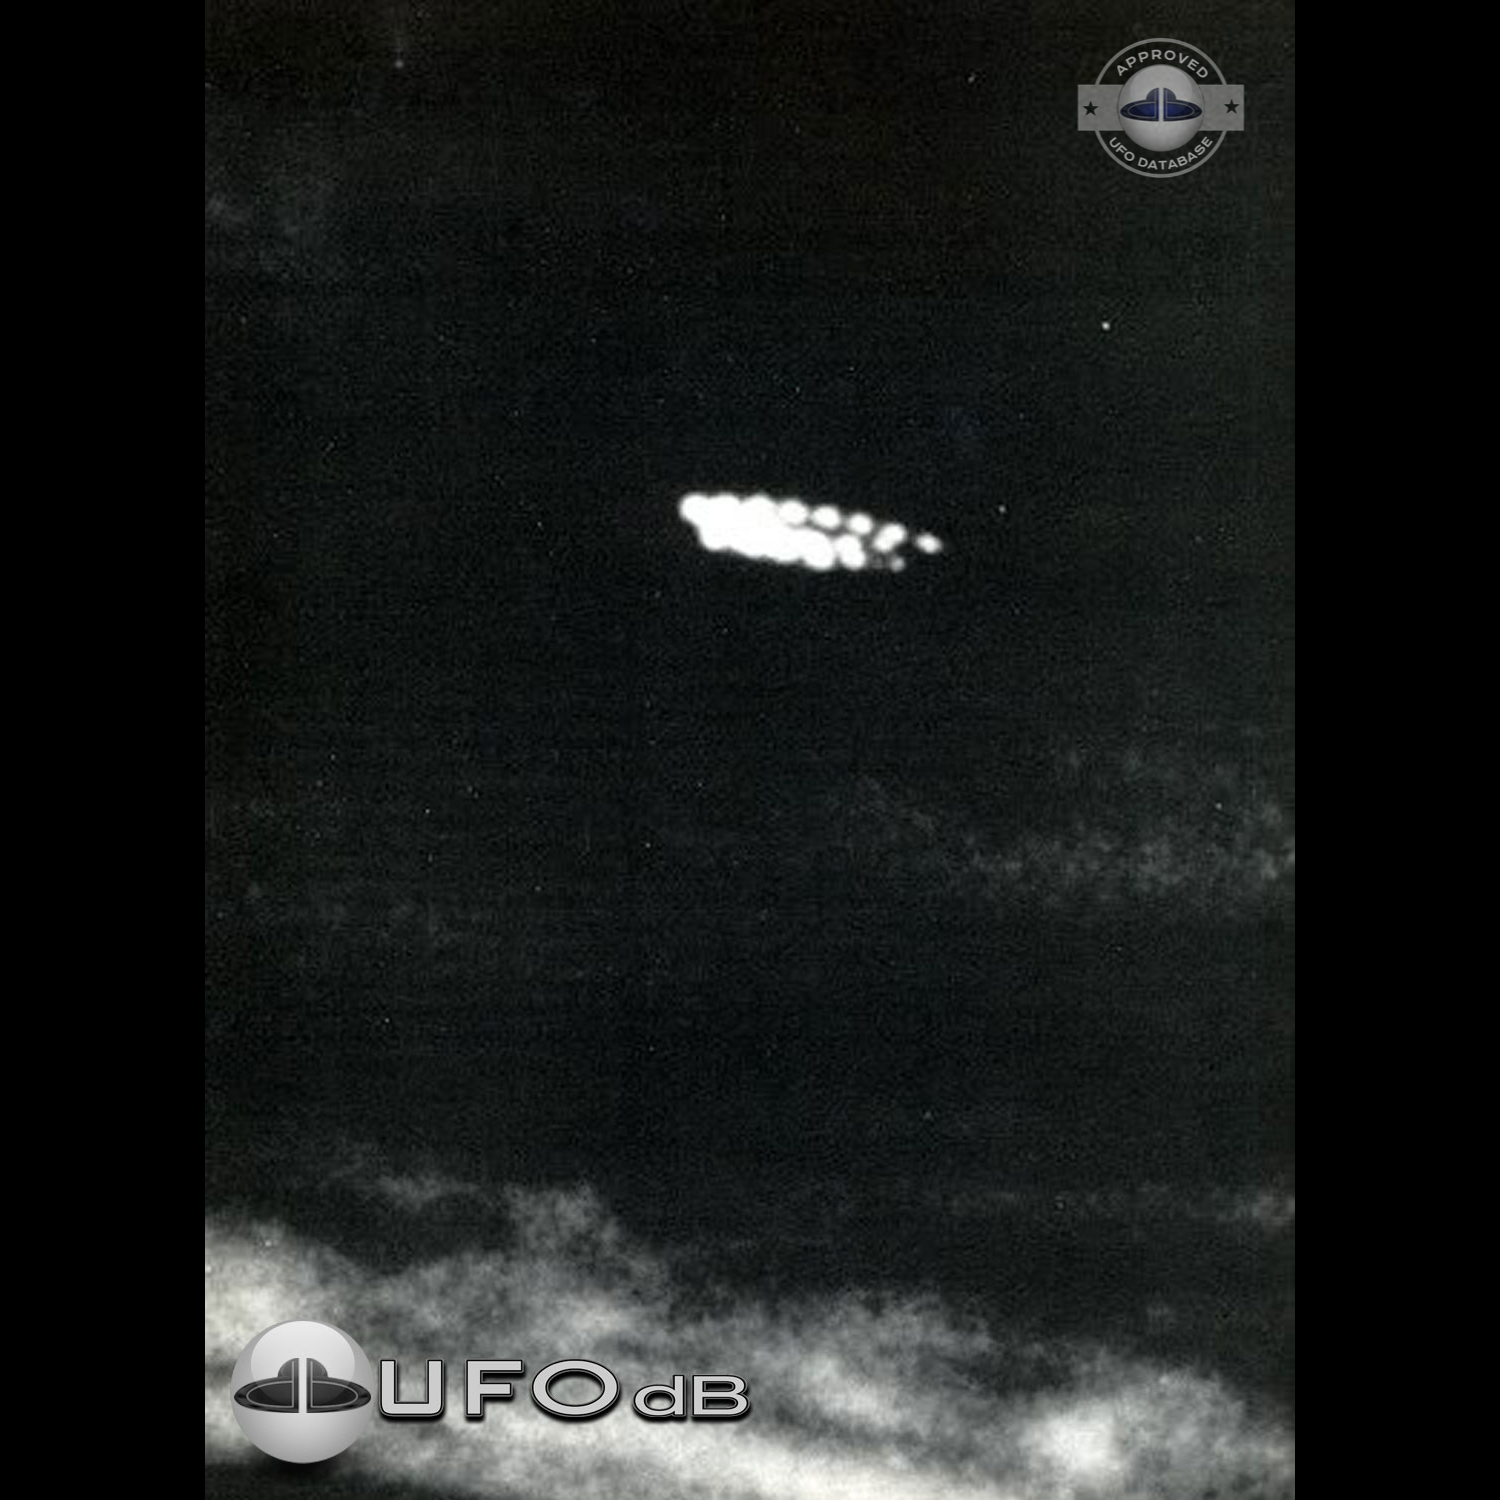 UFO seen in coastal village of Motunau in the north of Canterbury UFO Picture #74-1